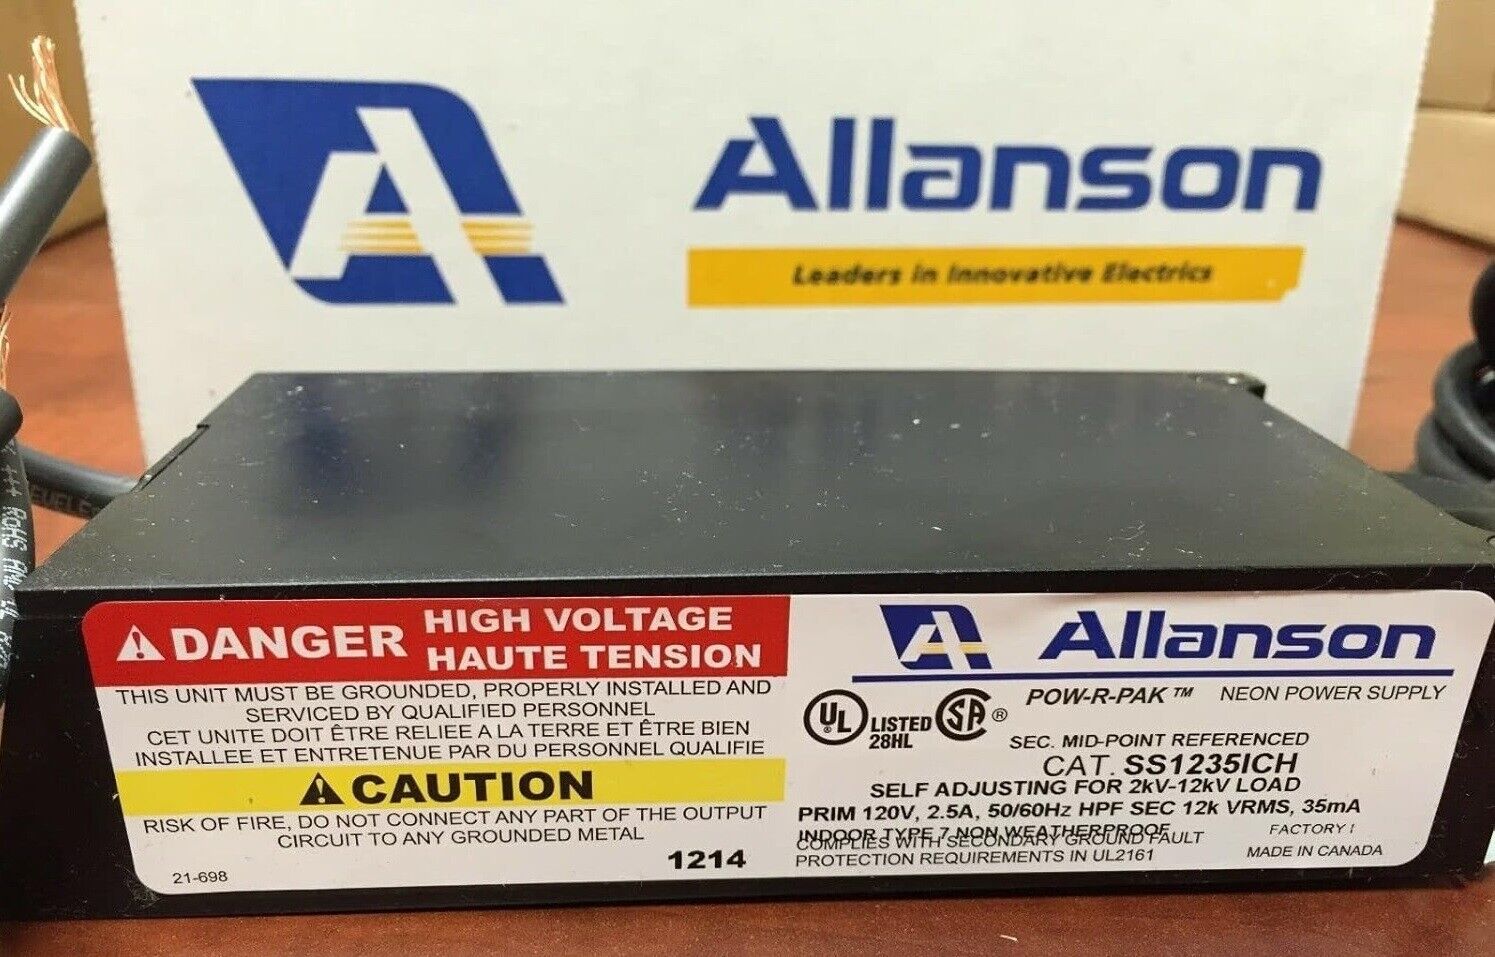 Allanson SS1235ICH 35mA 12000v Neon Transformer Power Supply - 